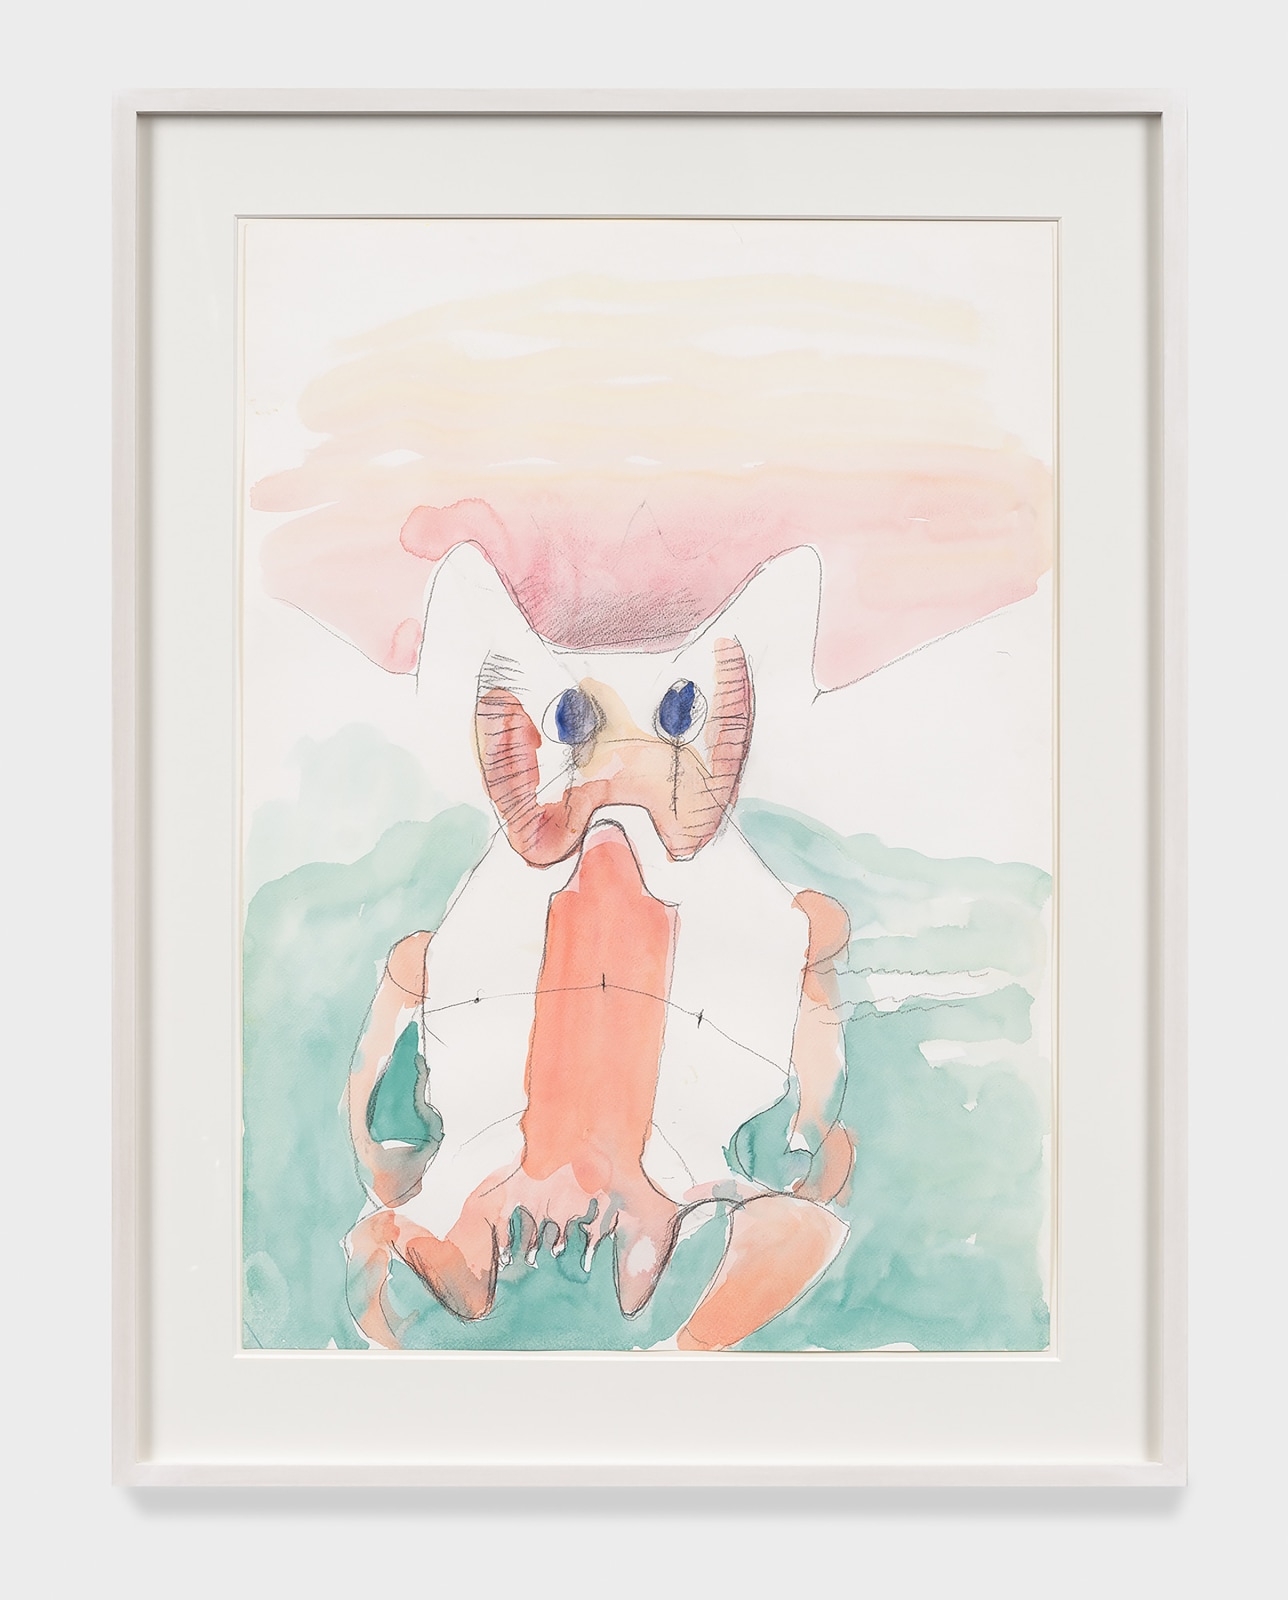 Maria Lassnig, Untitled, ca. 1990 - 1999